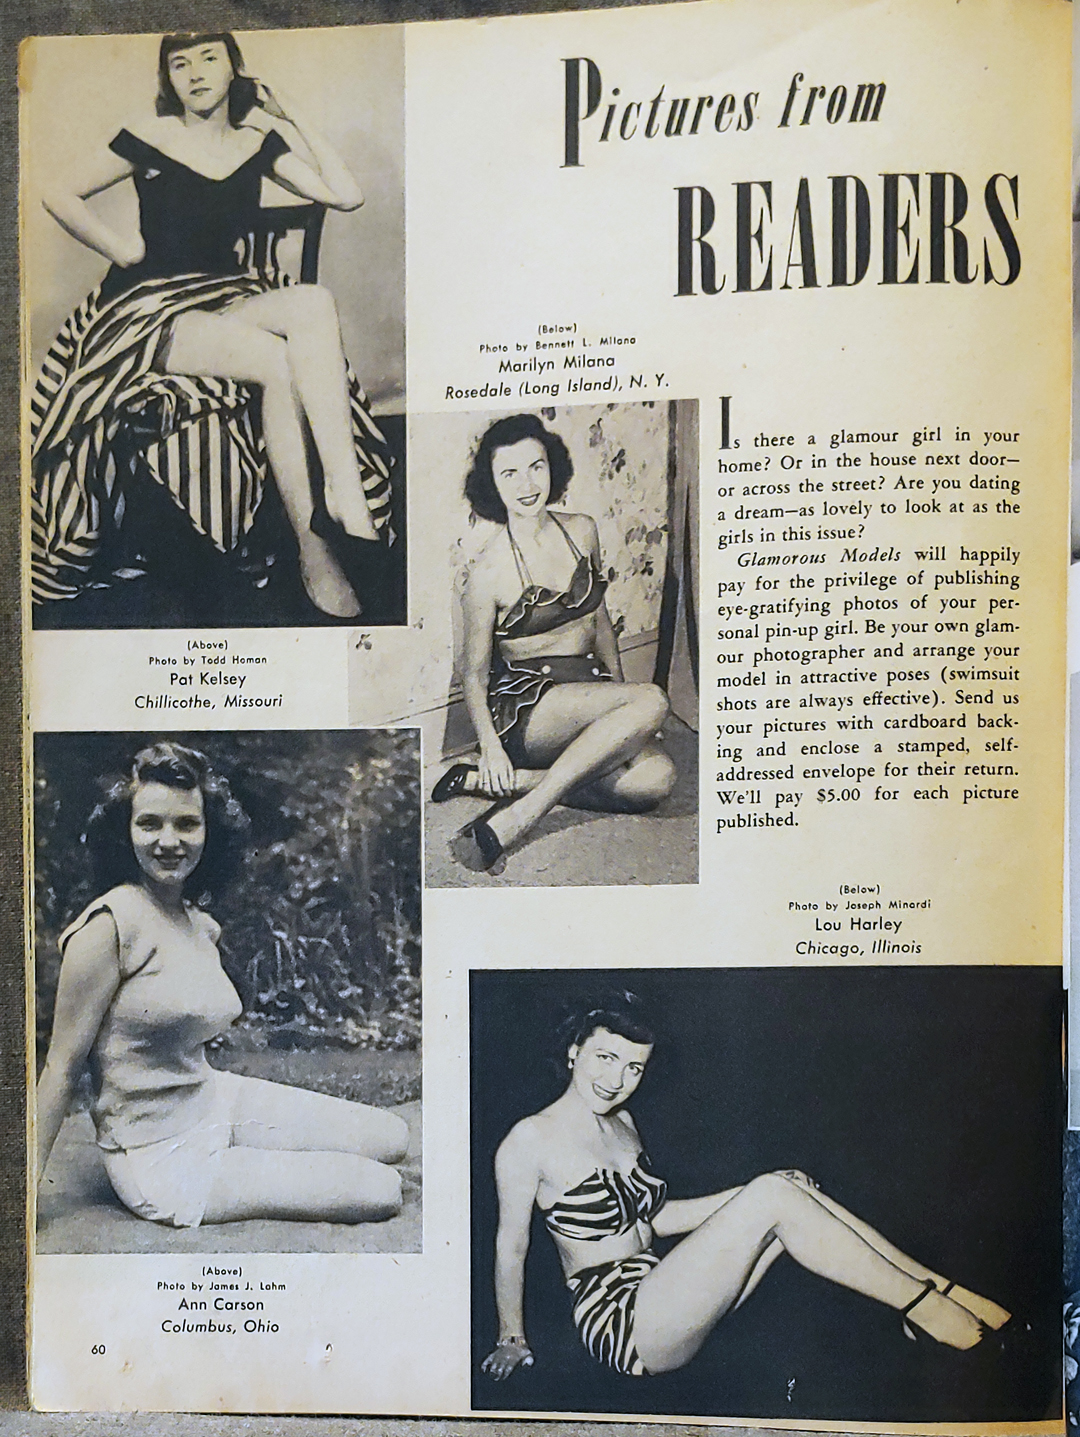 50s Vintage Porn Magazines - Glamorous Models - No.10 November 1950 - Vintage Adult Magazine - XXX -  Screaming-Greek